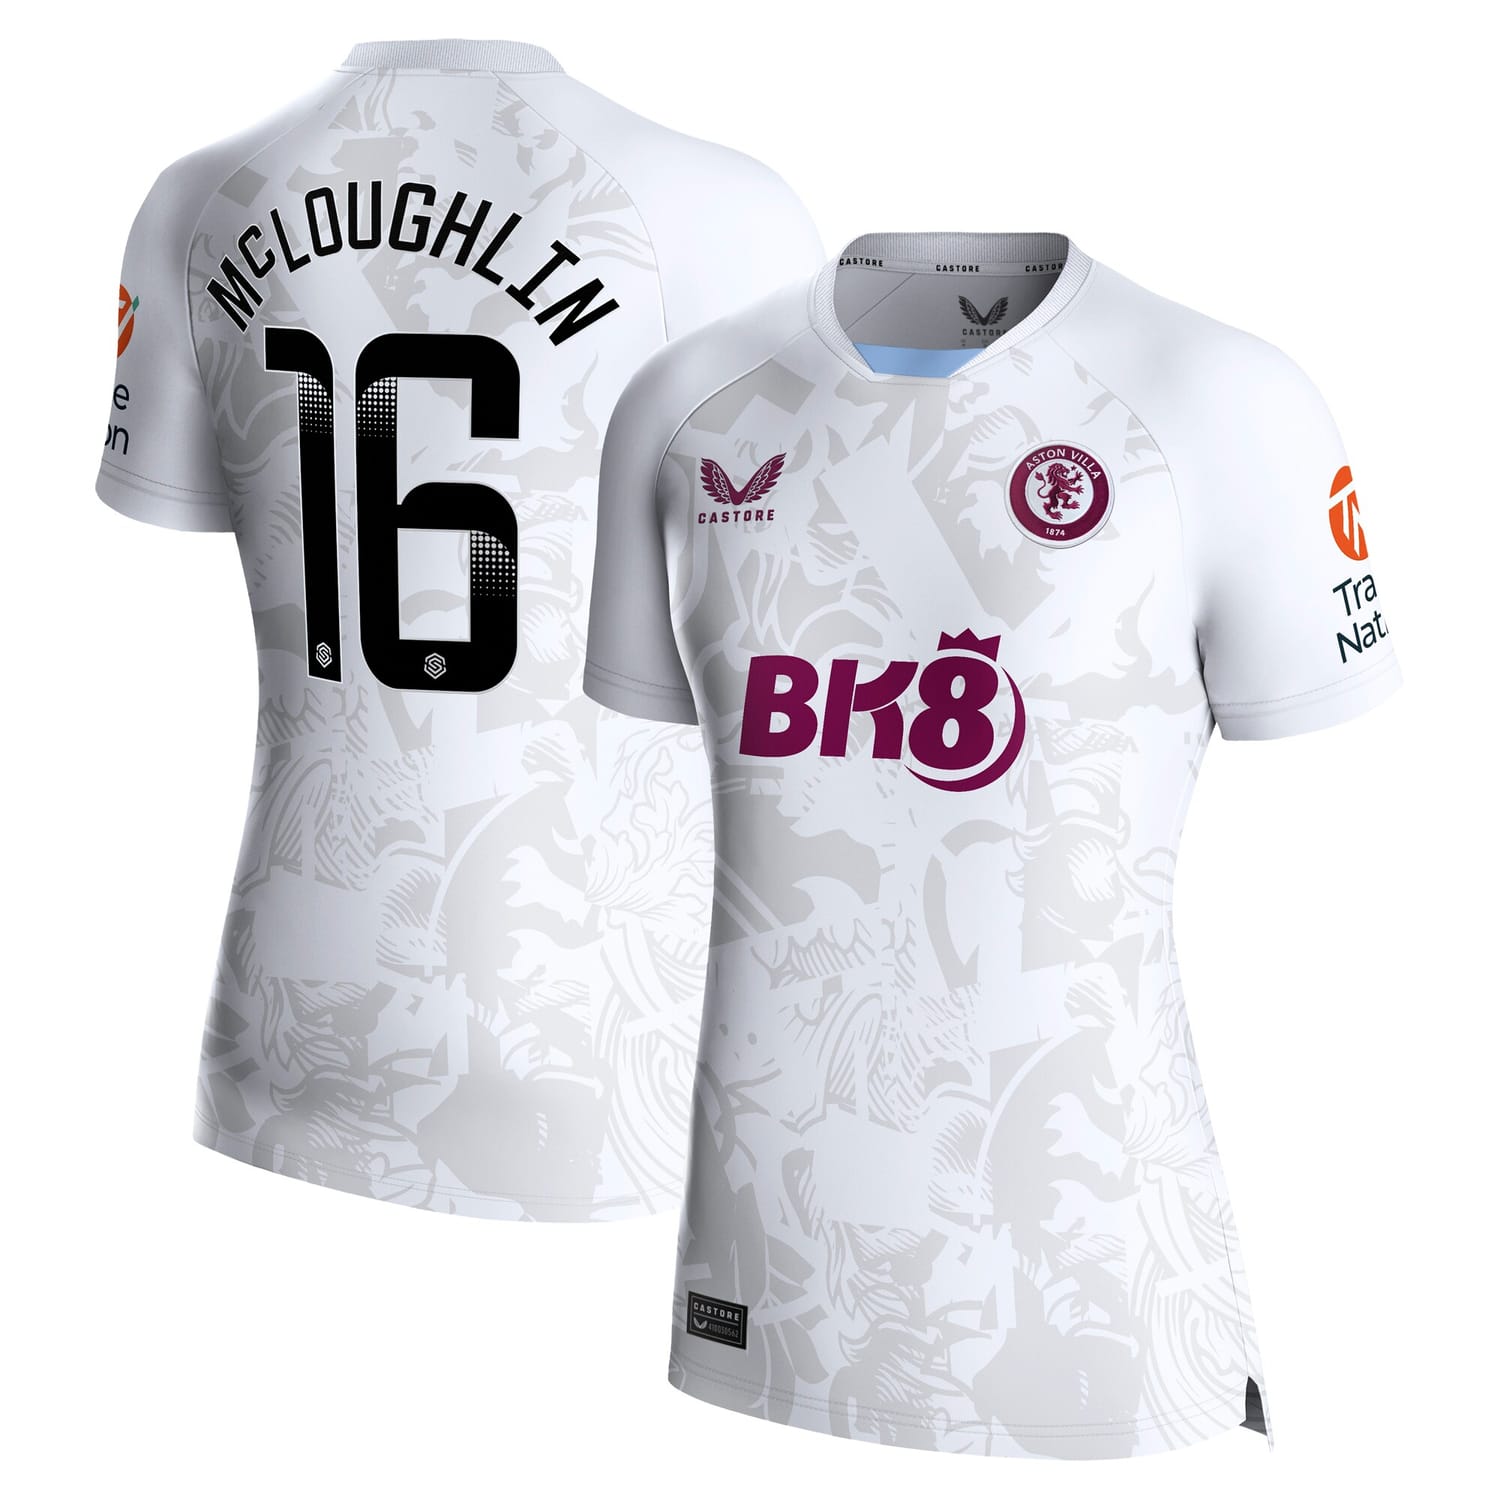 Premier League Aston Villa Away WSL Jersey Shirt 2023-24 player Olivia McLoughlin 16 printing for Women